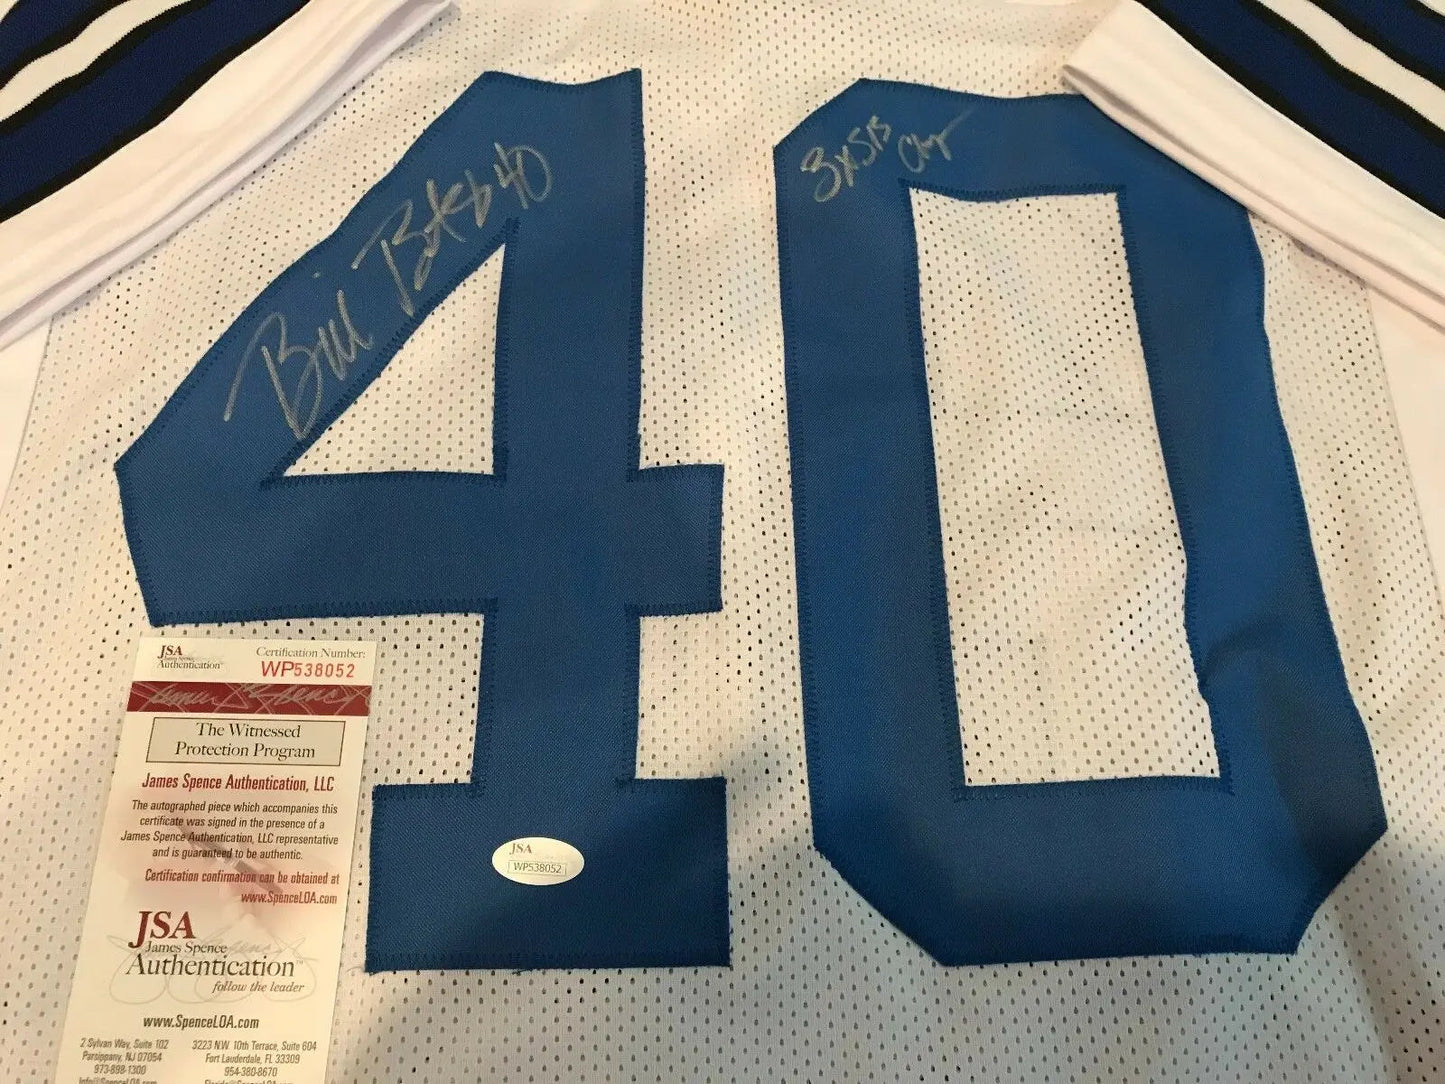 MVP Authentics Bill Bates Autographed Signed Inscribed Dallas Cowboys Jersey Jsa  Coa 108 sports jersey framing , jersey framing